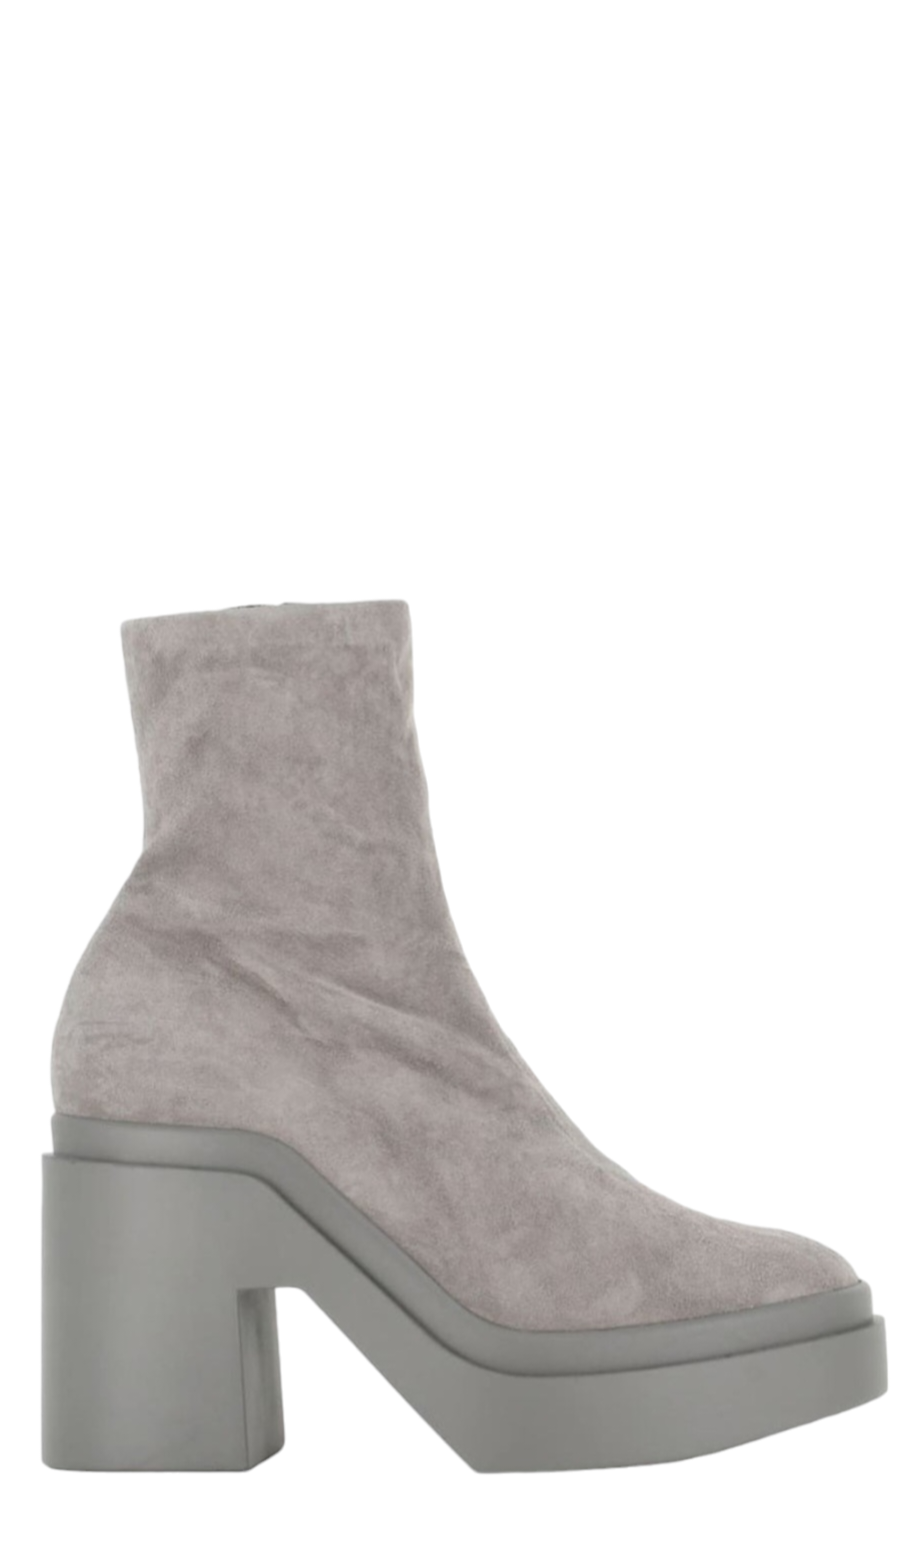 Nina Grey Platform Boots - Clergerie - Liberty Shoes Australia